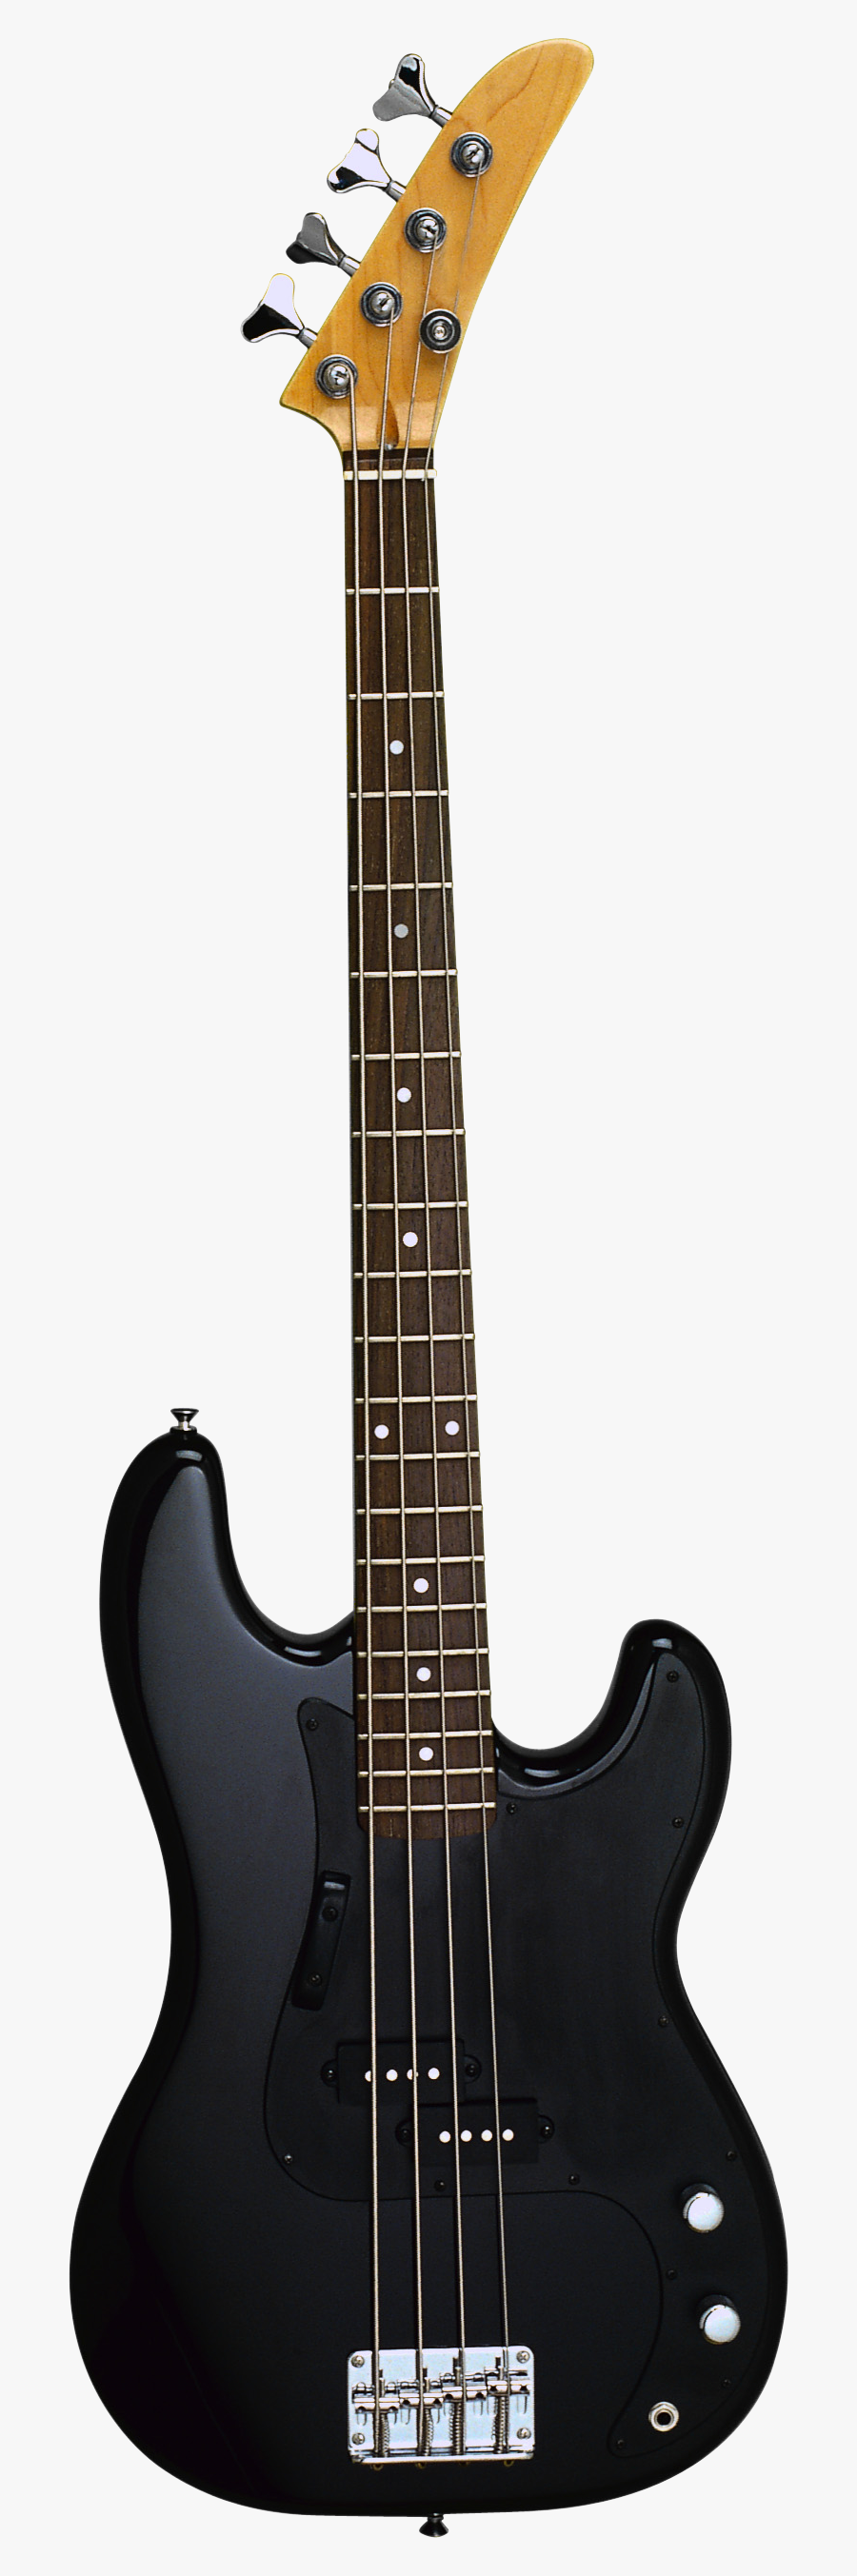 Electric Black Guitar Png, Transparent Clipart